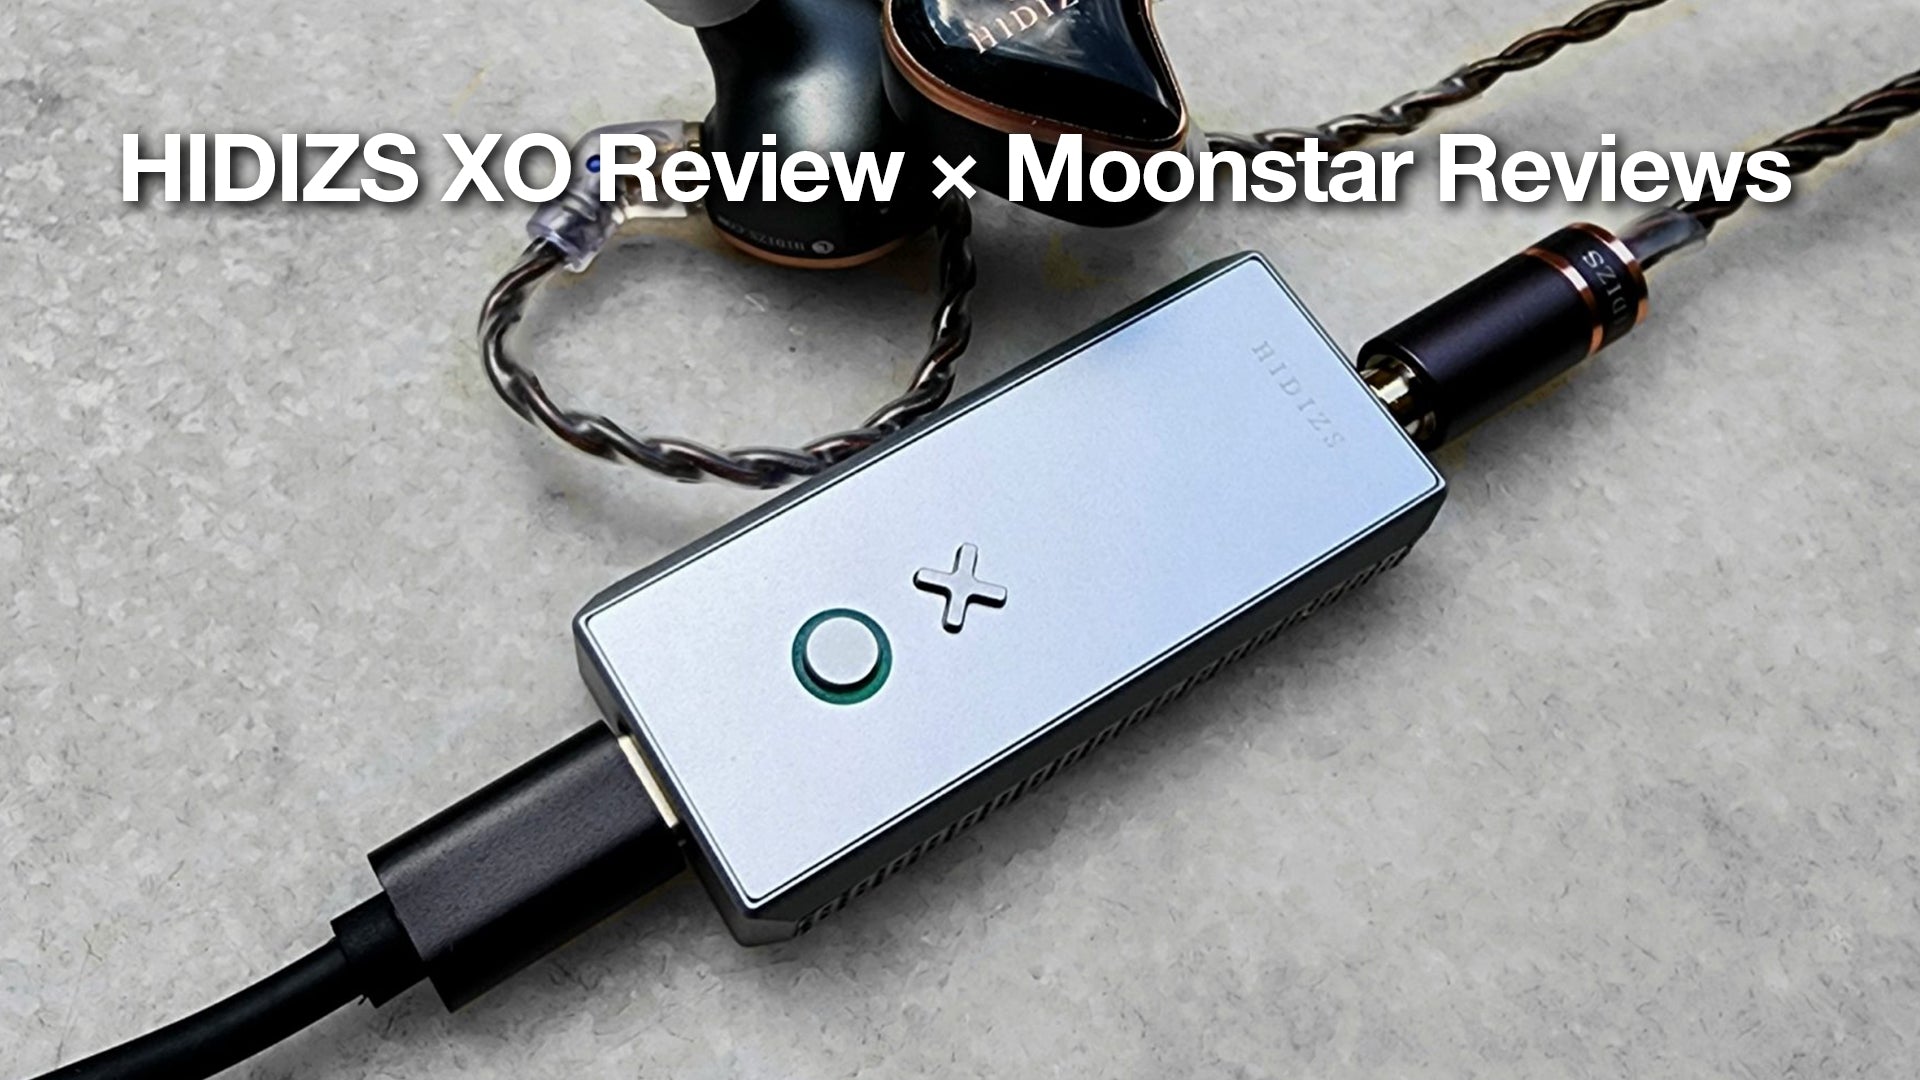 HIDIZS XO Review - Moonstar Reviews